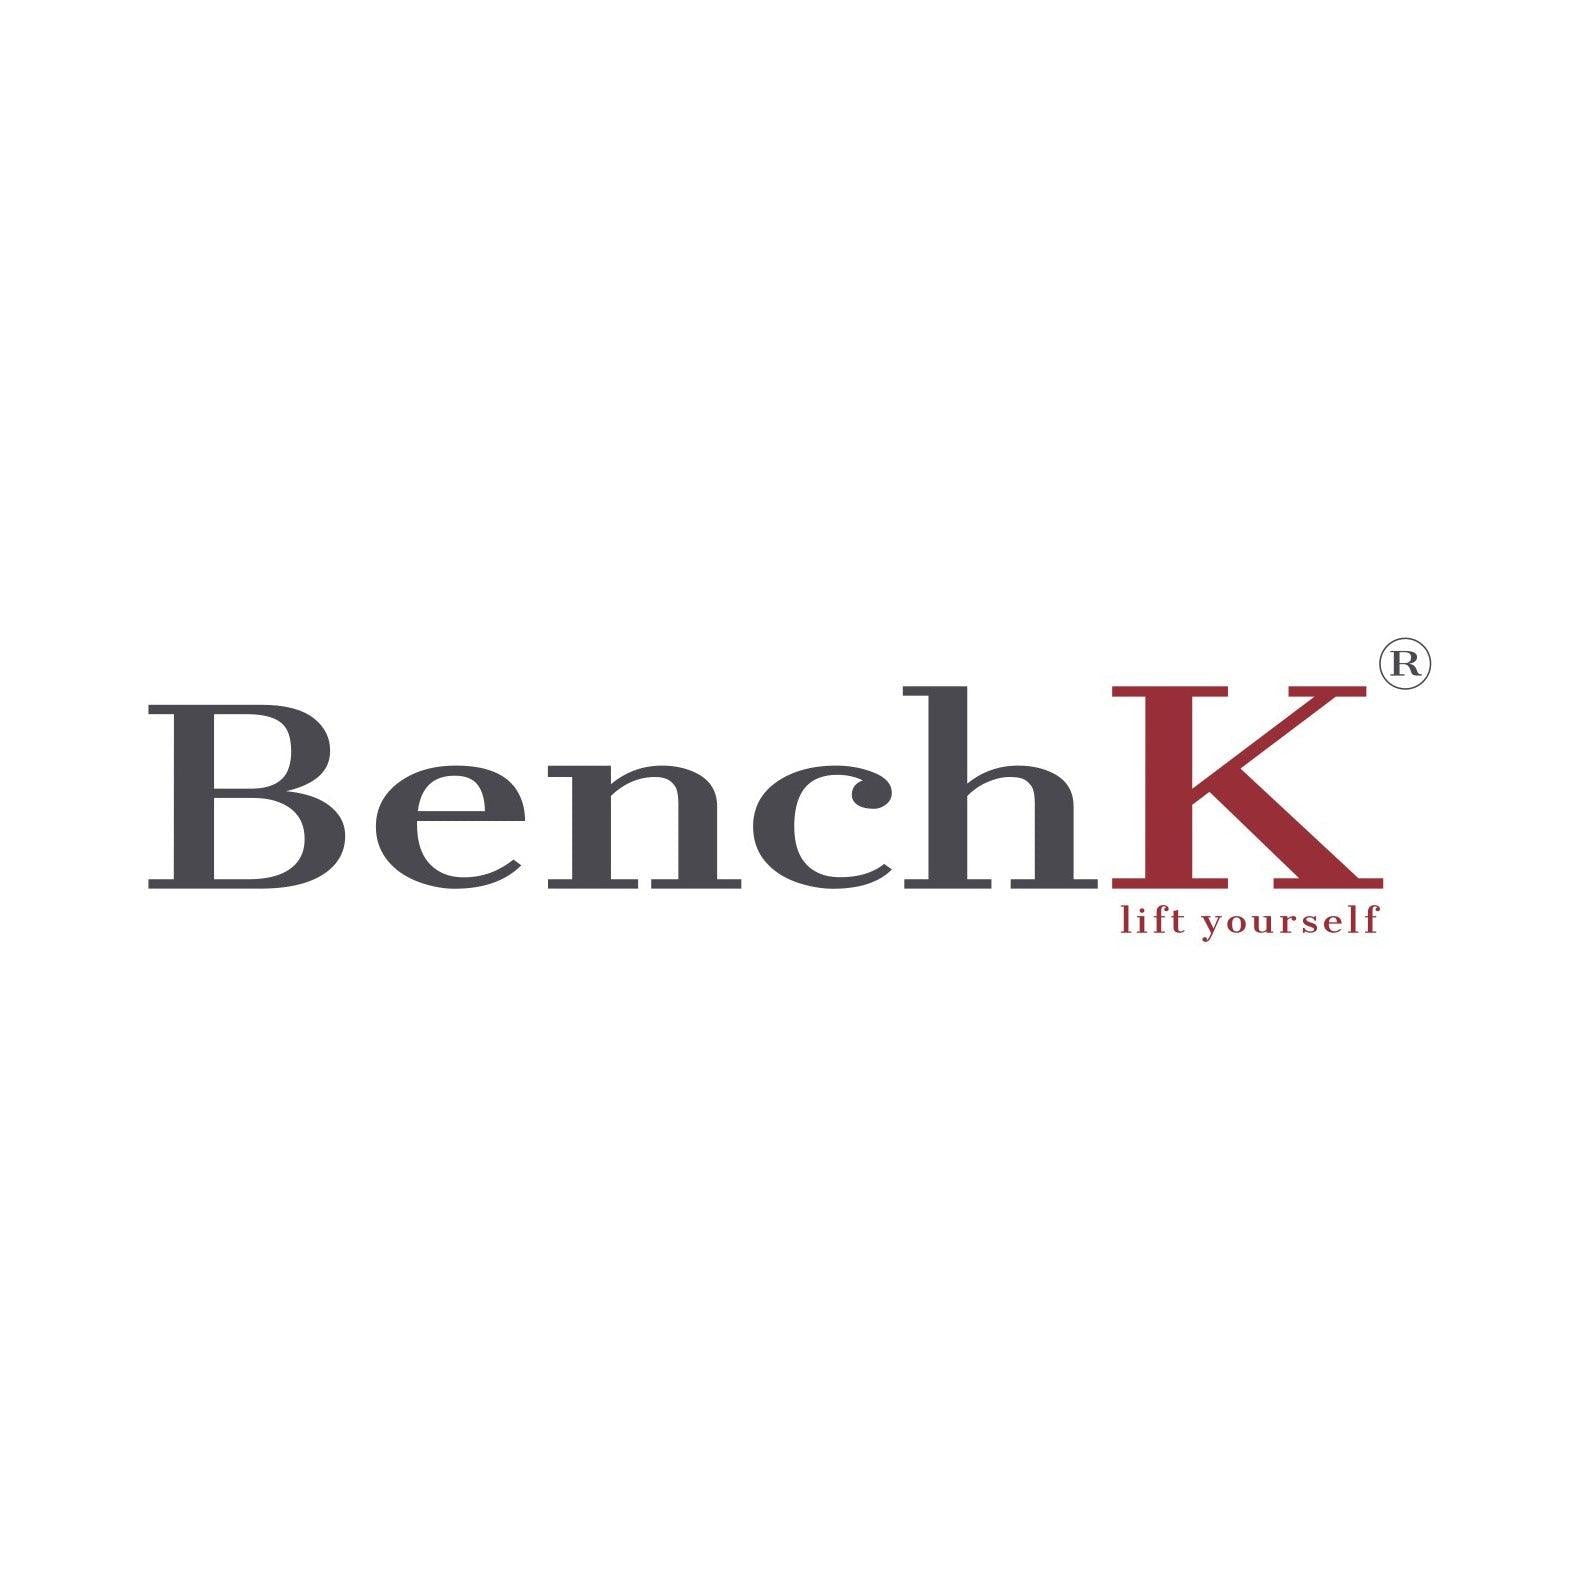 BenchK - 37+ Design